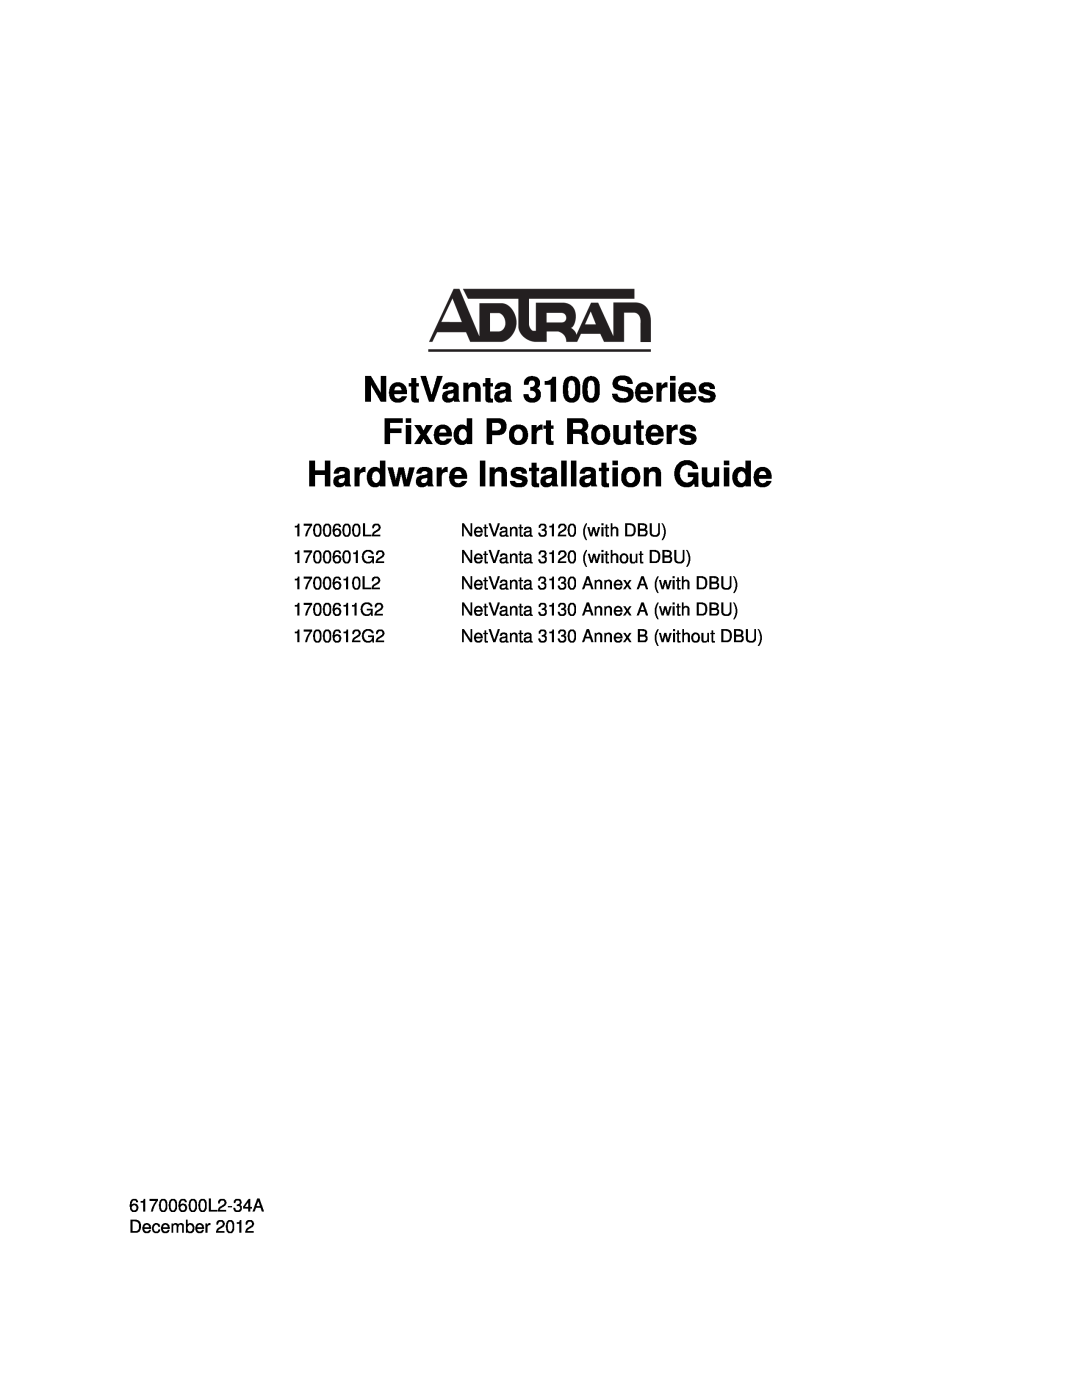 ADTRAN 1700600L2, 1700611G2, 1700601G2 manual NetVanta 3100 Series Fixed Port Routers Hardware Installation Guide 